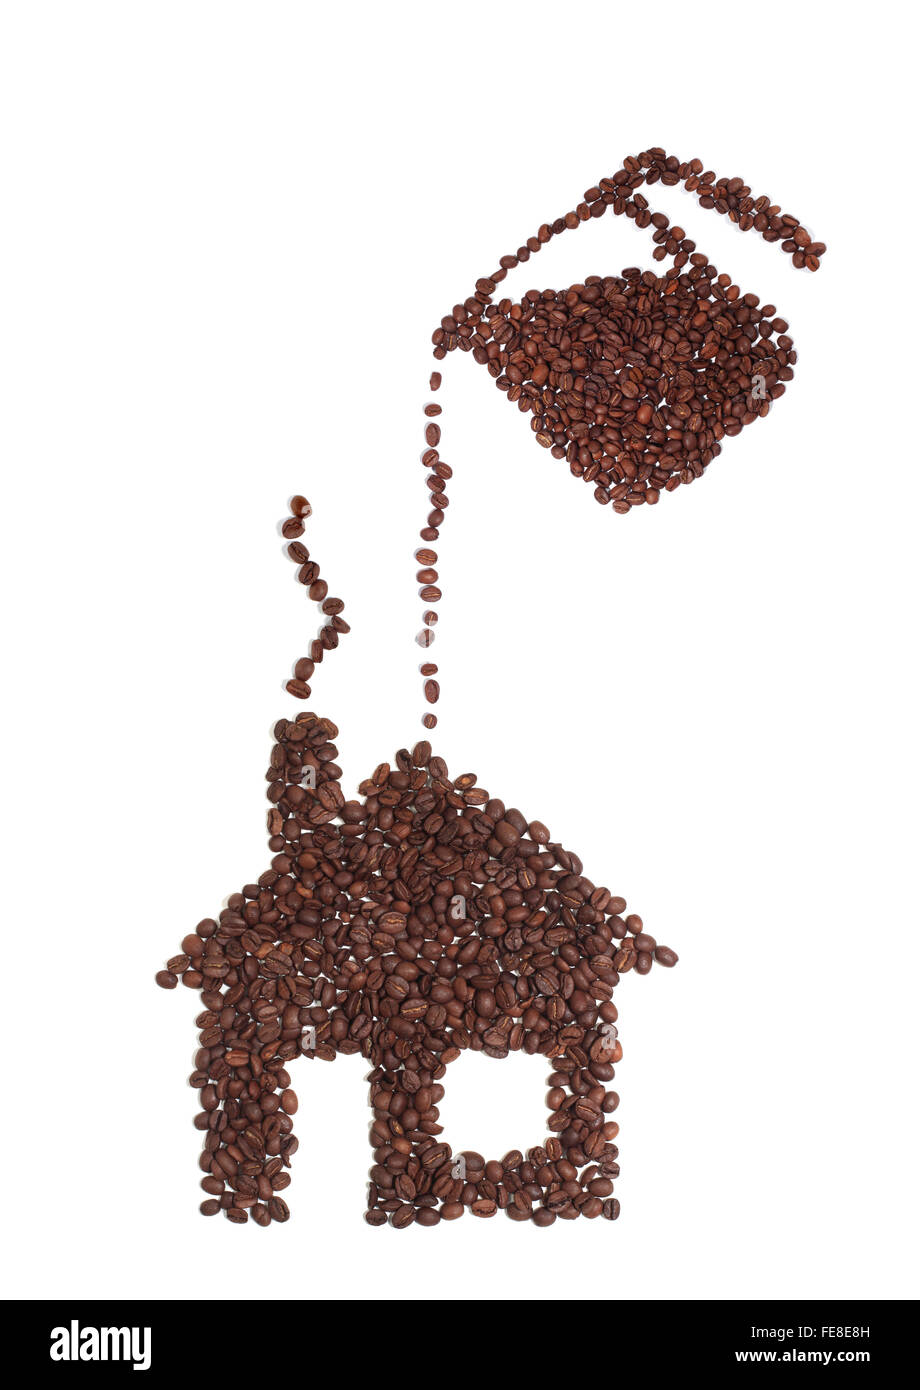 Bricco di caffè versare i fagioli in una casa di caffè fatto di chicchi di caffè Foto Stock